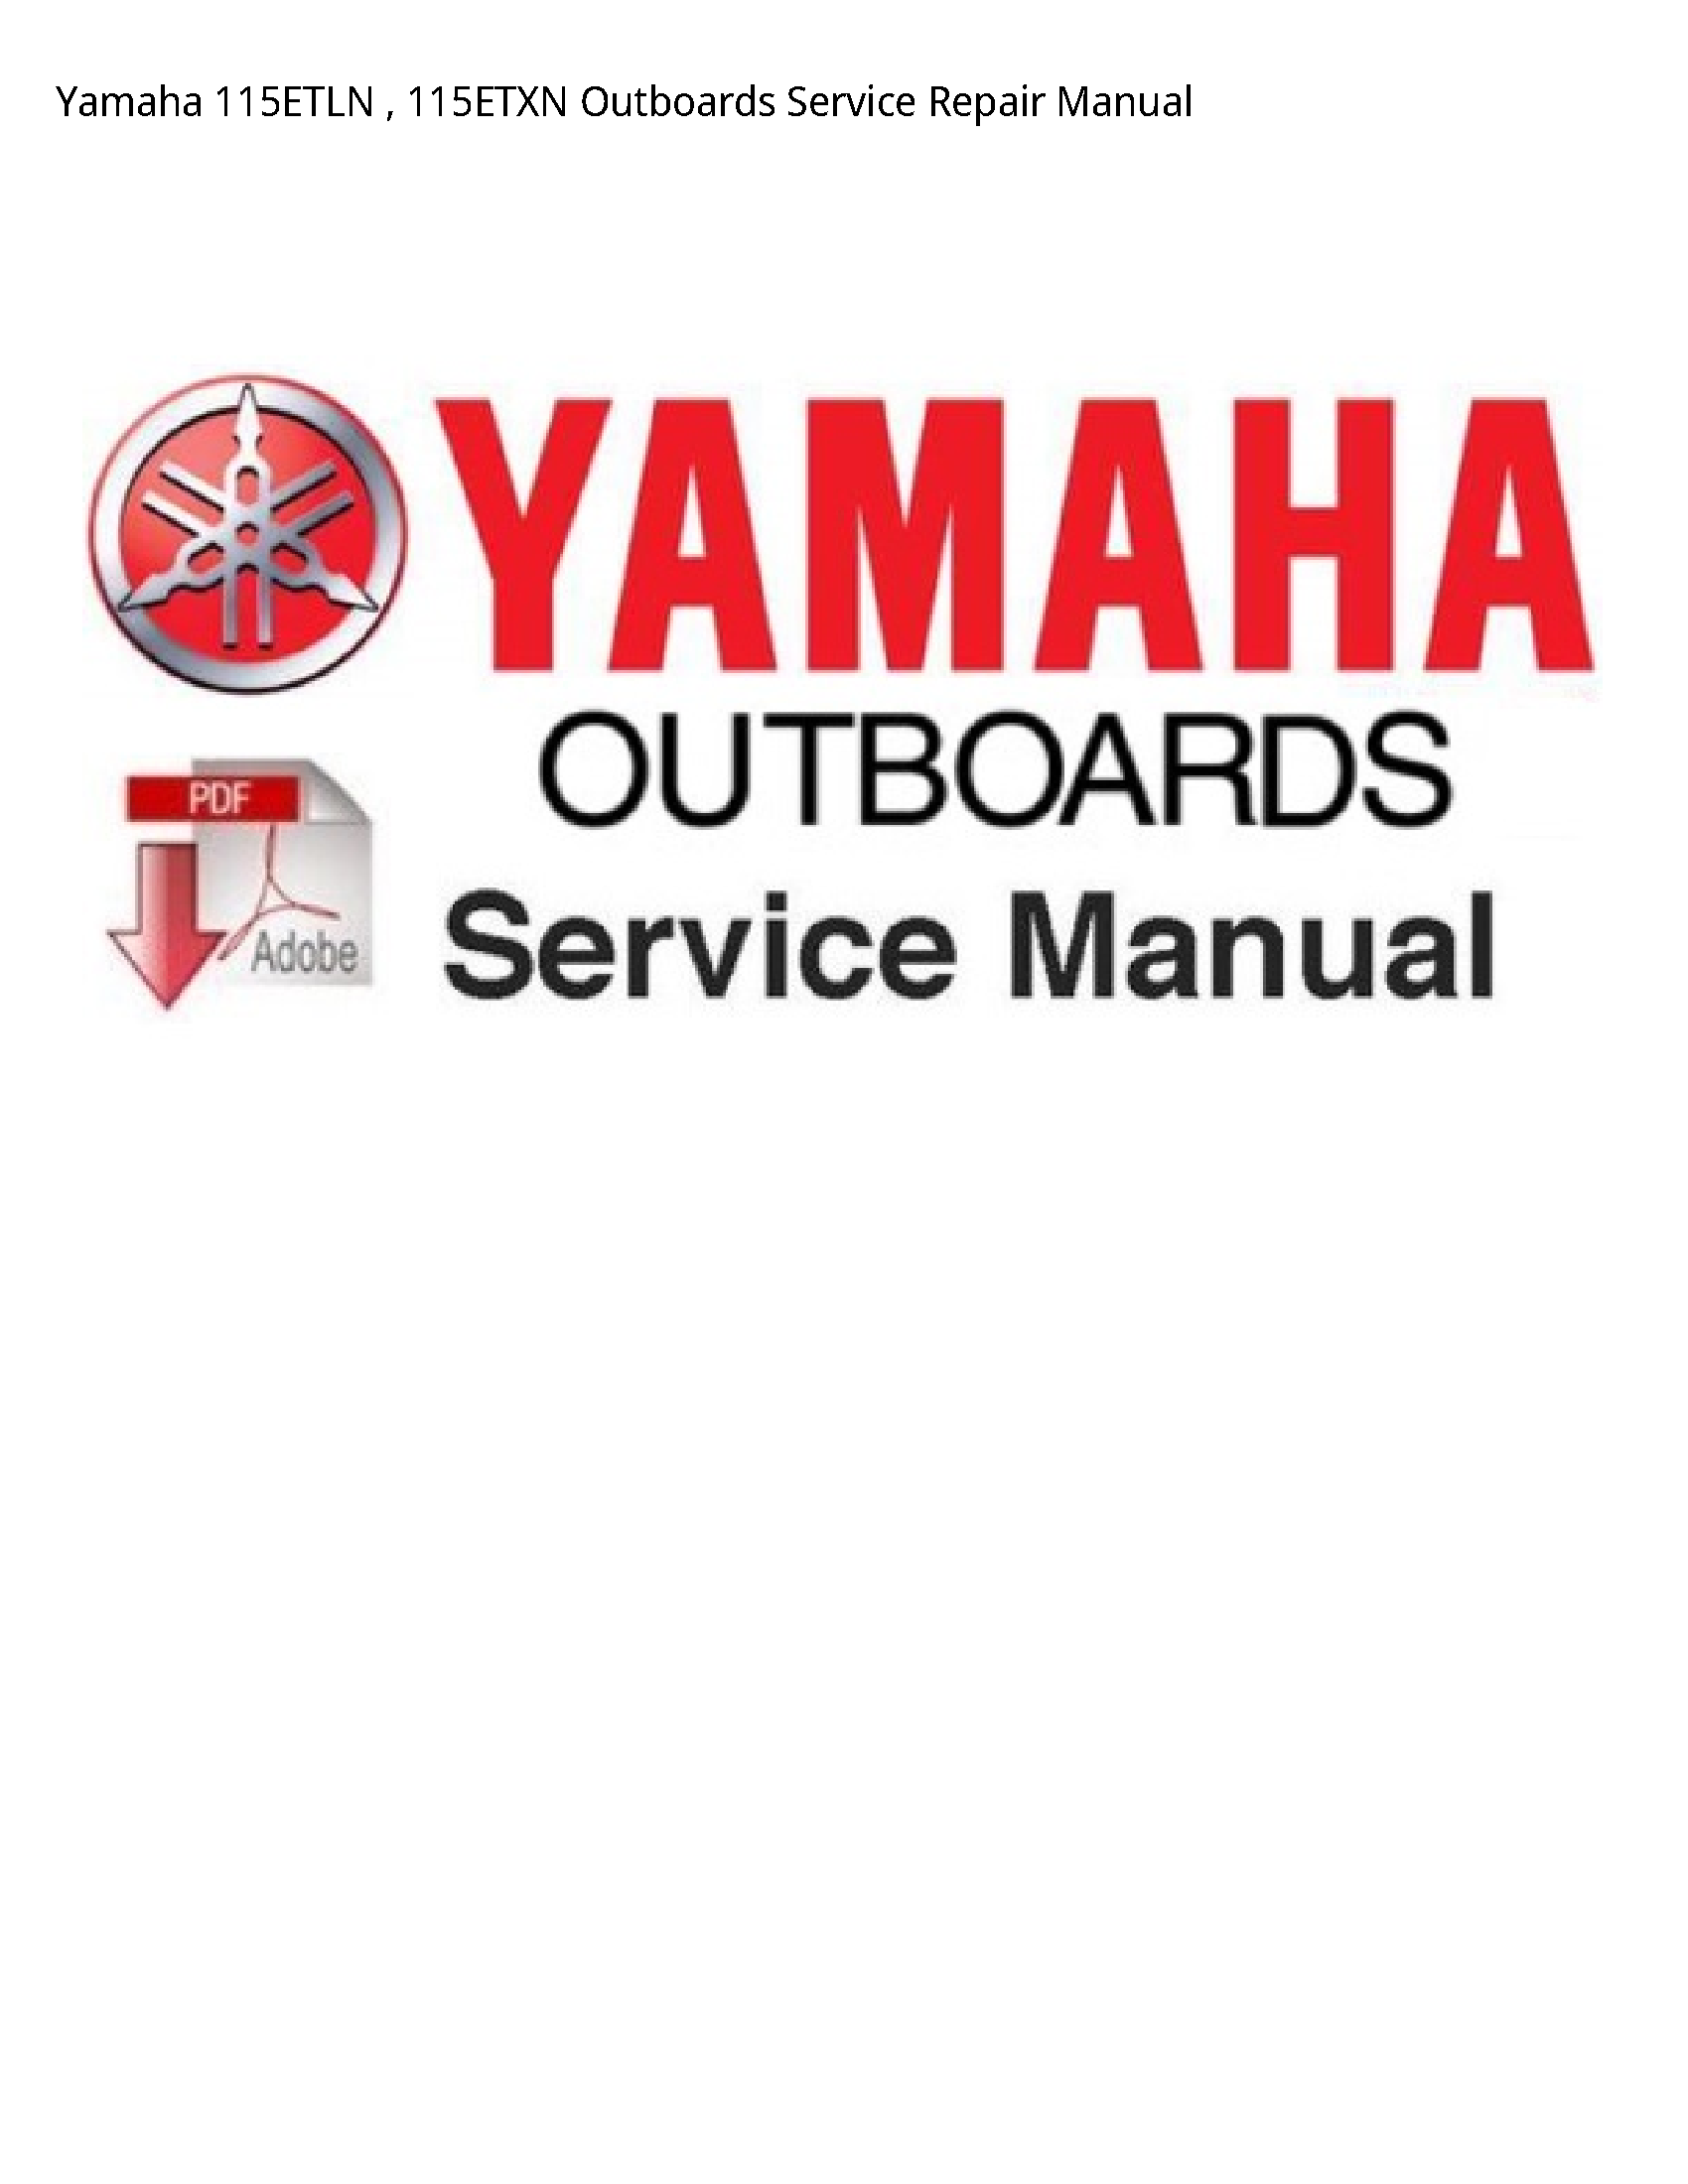 Yamaha 115ETLN Outboards manual